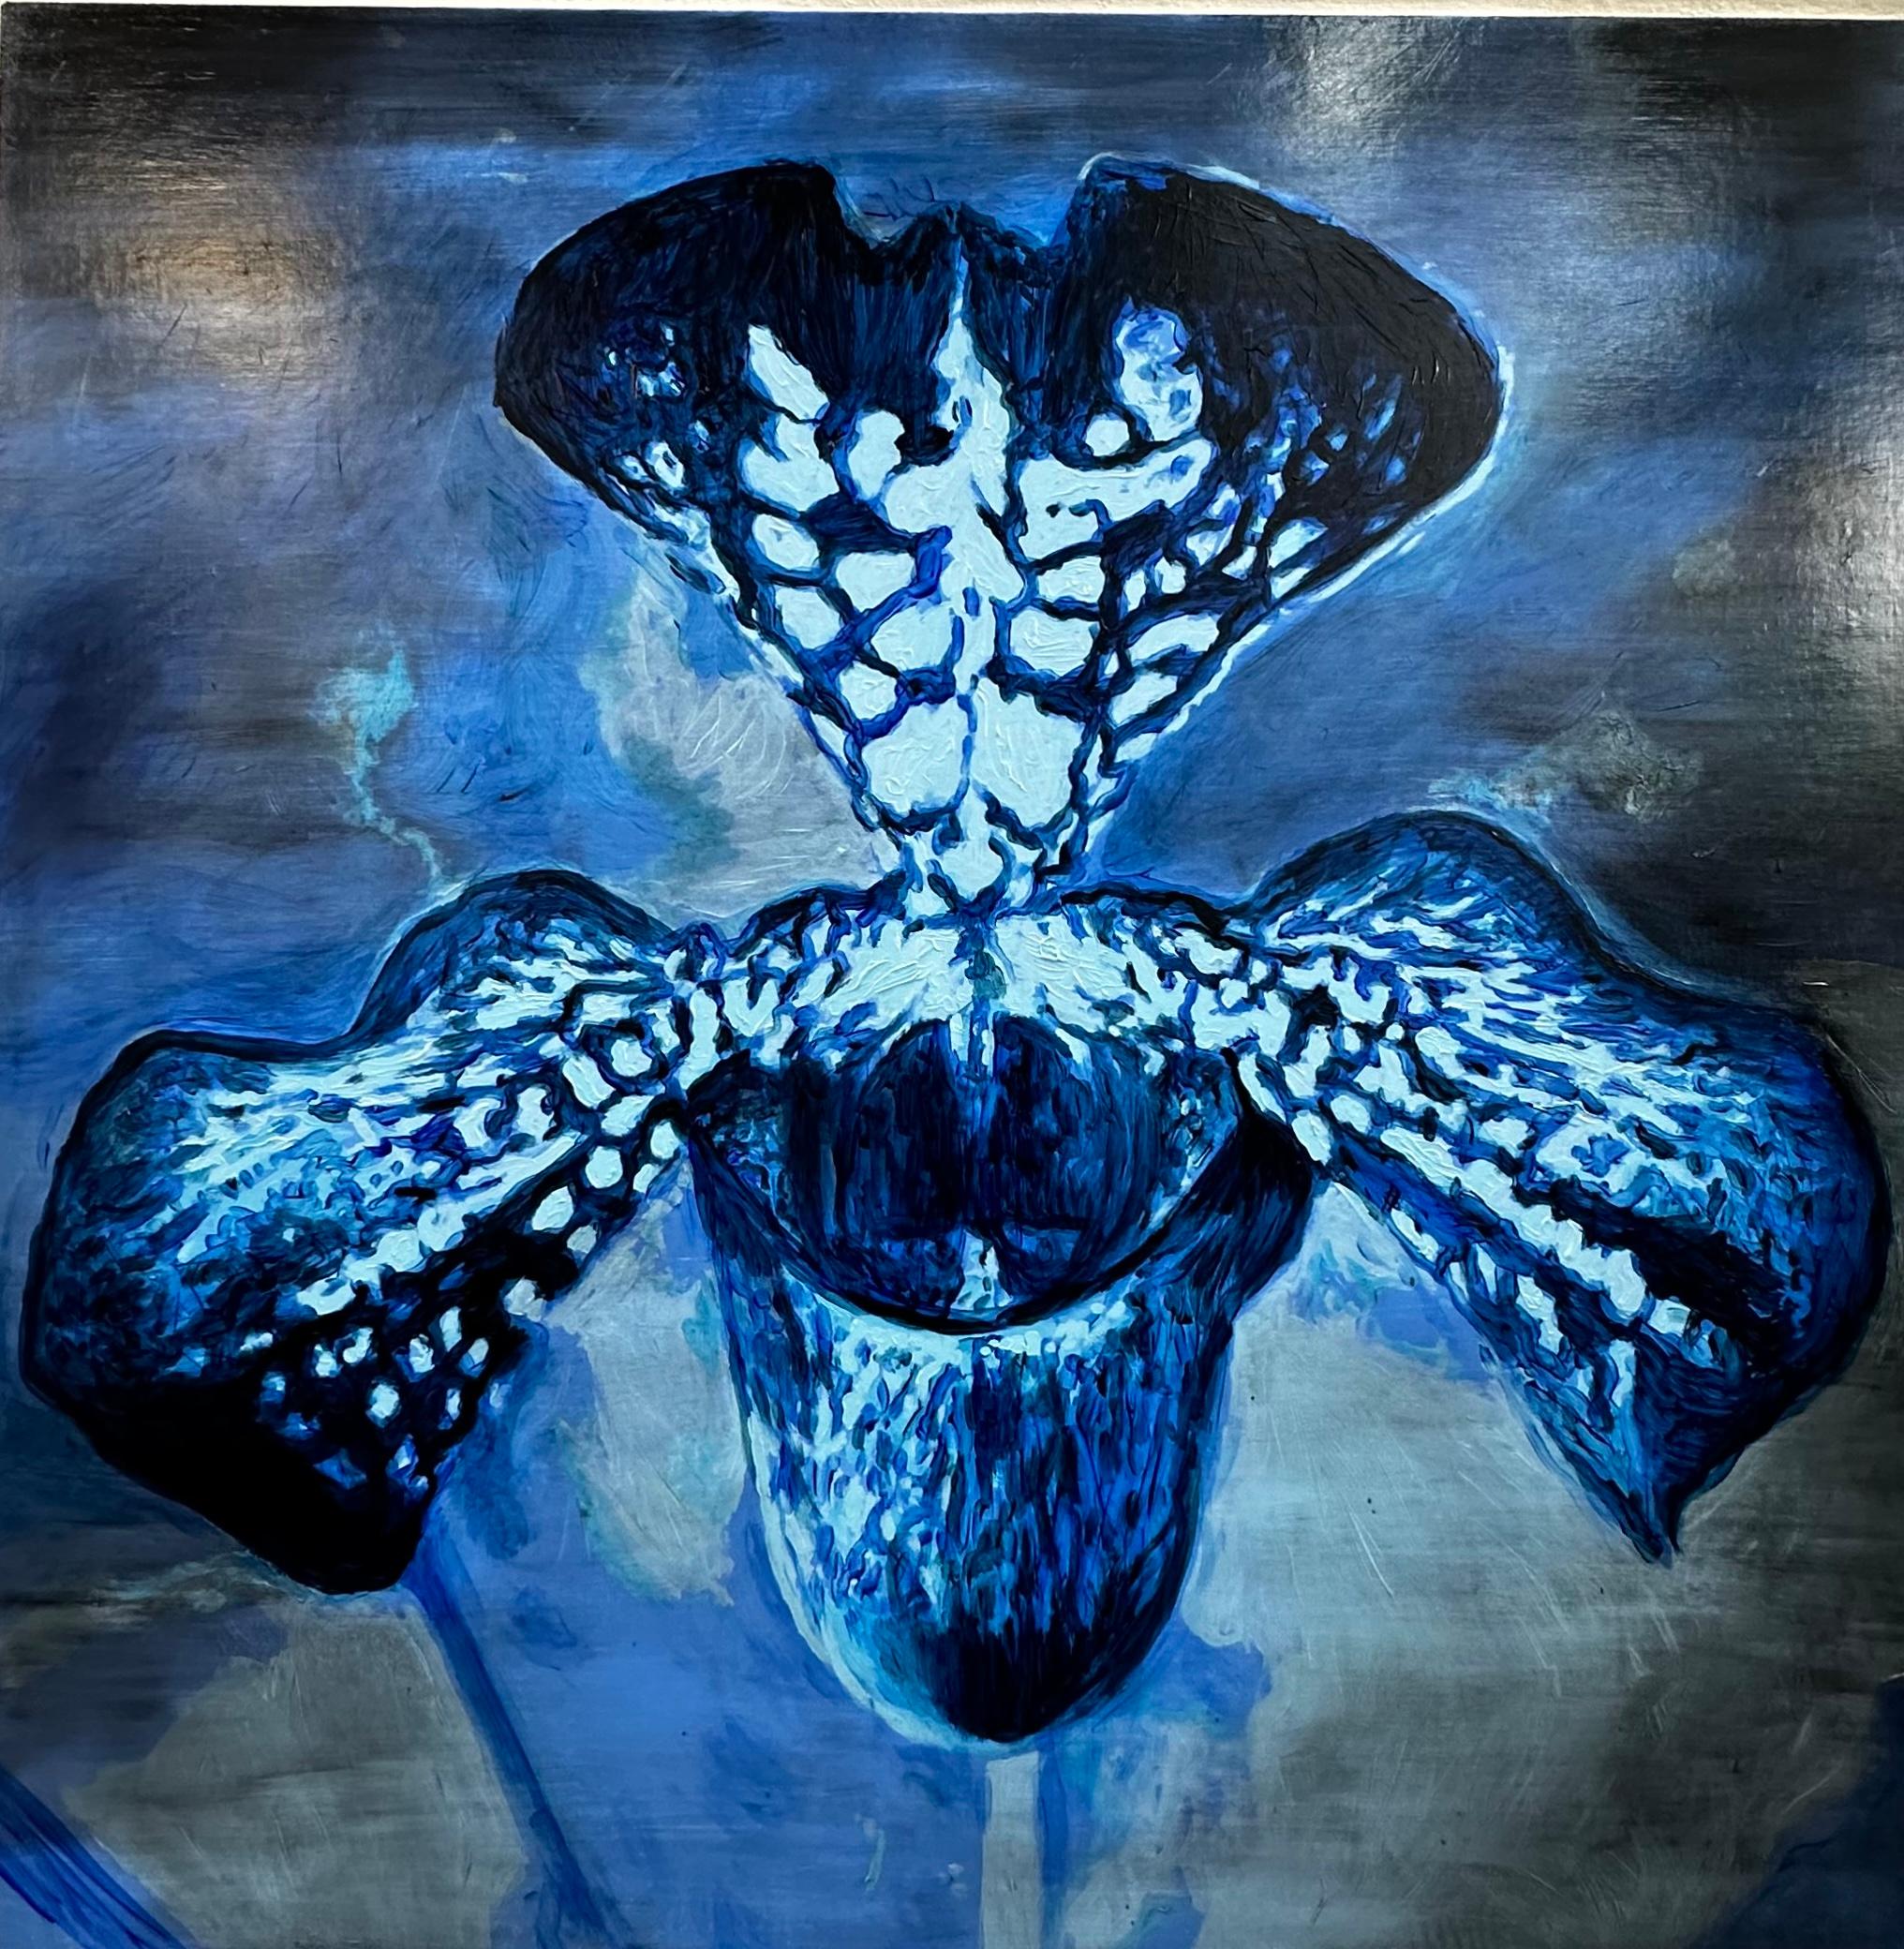 Untitled - Orquid, nature, figurative oil painting, film negatives, blue & black